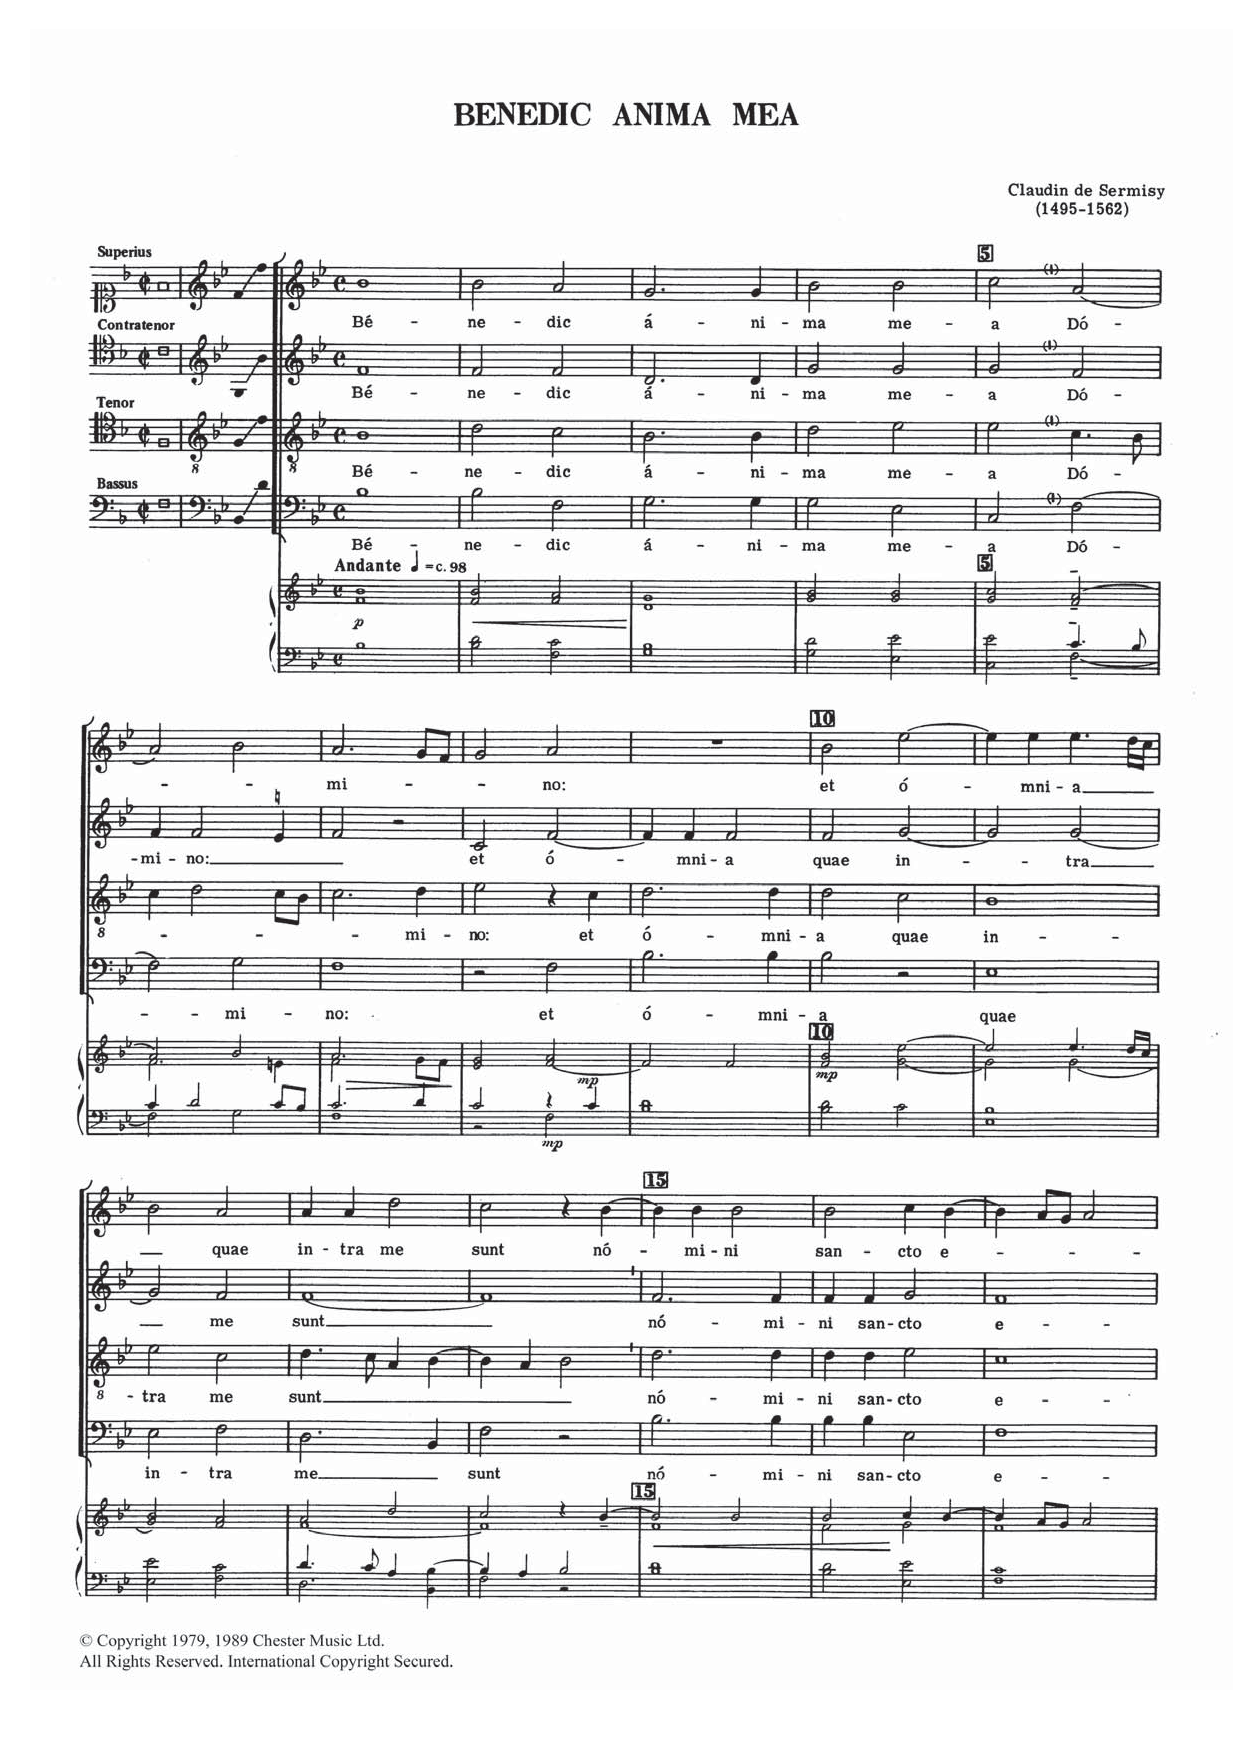 Claudin de Sermisy Benedic Anima Mea Sheet Music Notes & Chords for SATB - Download or Print PDF